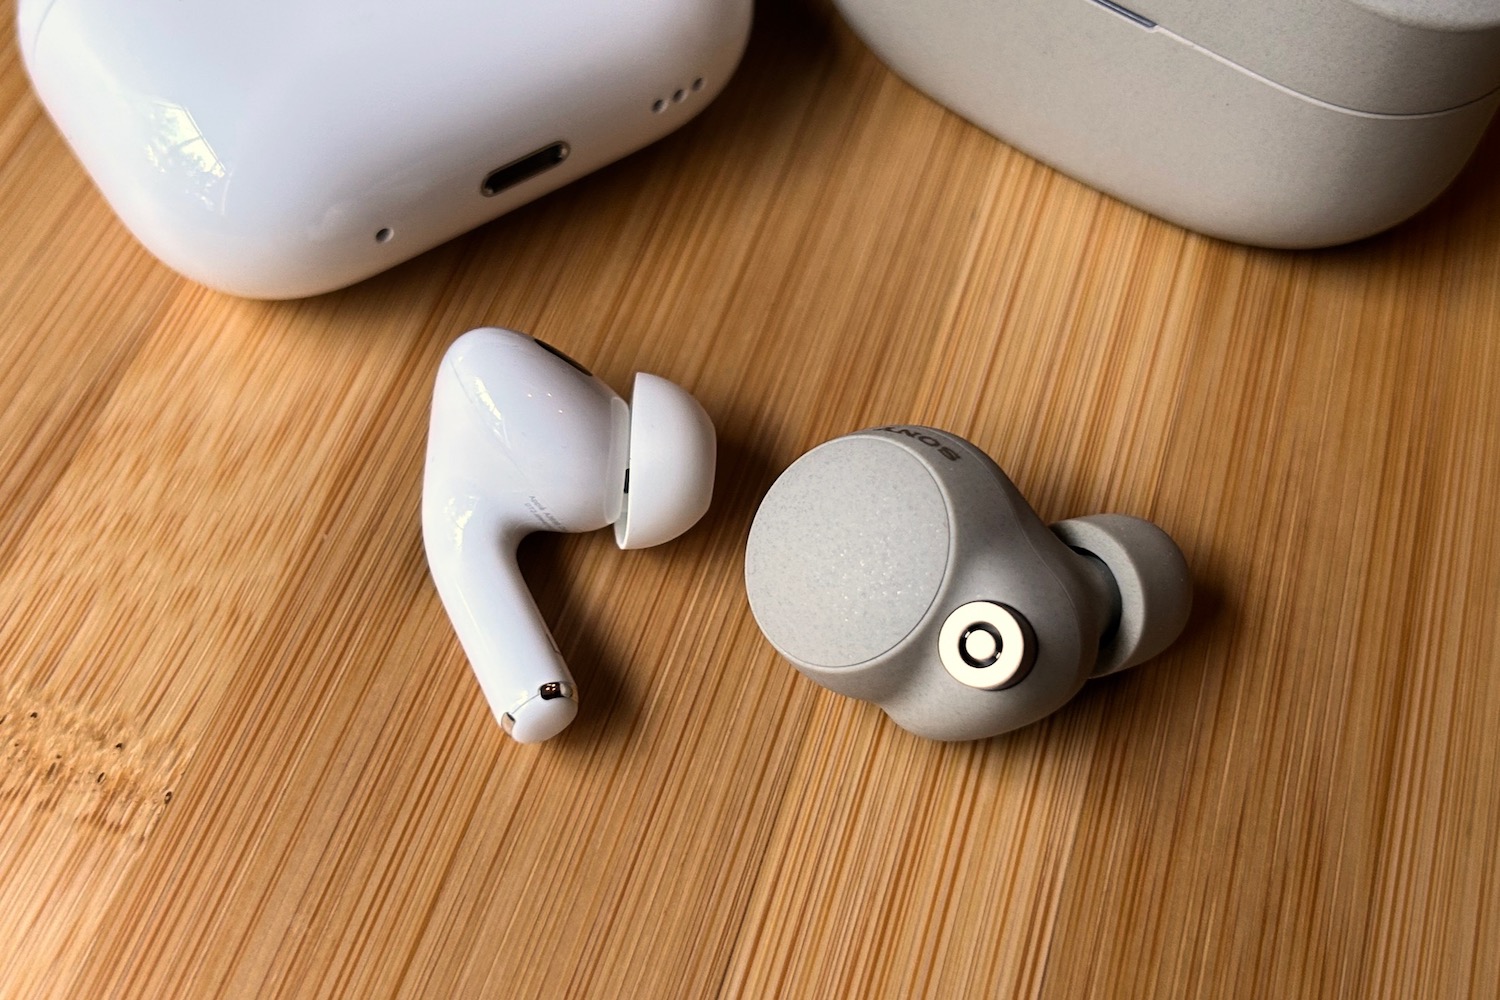 Apple AirPods (2nd generation) AirPods Auriculares Inalámbrico Dentro de  oído Llamadas/Música Bluetooth Blanco